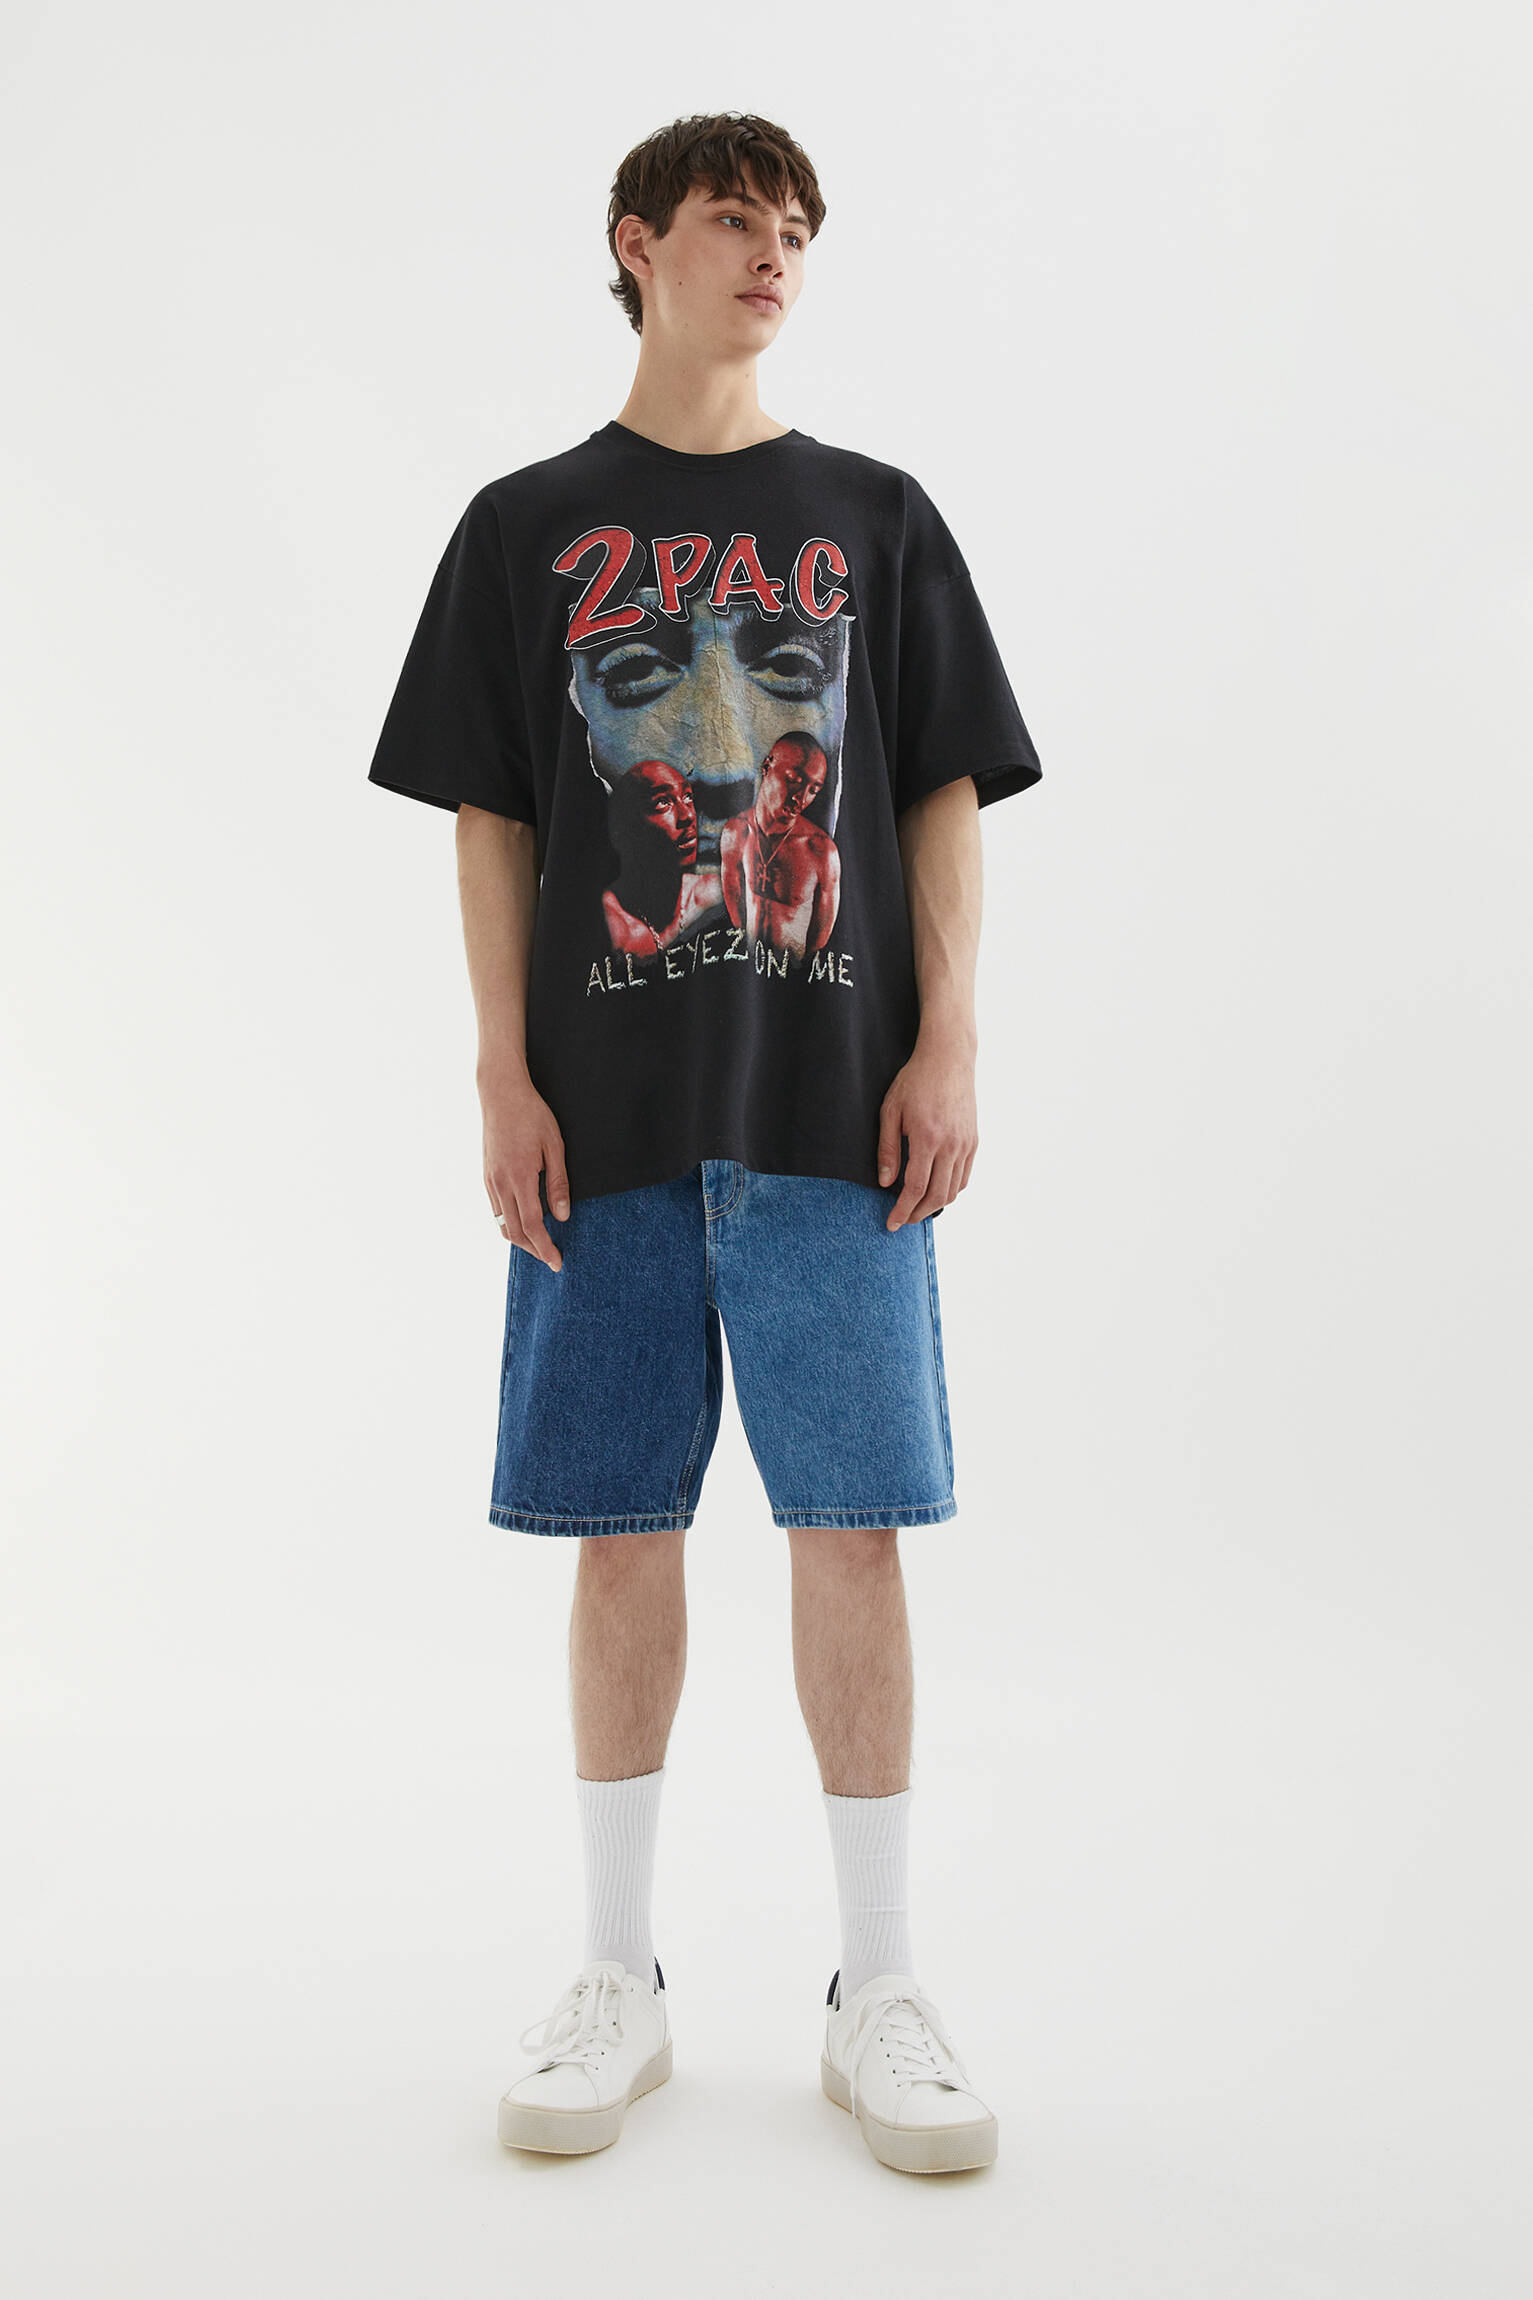 Pull & Bear - Tupac “All Eyez on Me” T-shirt